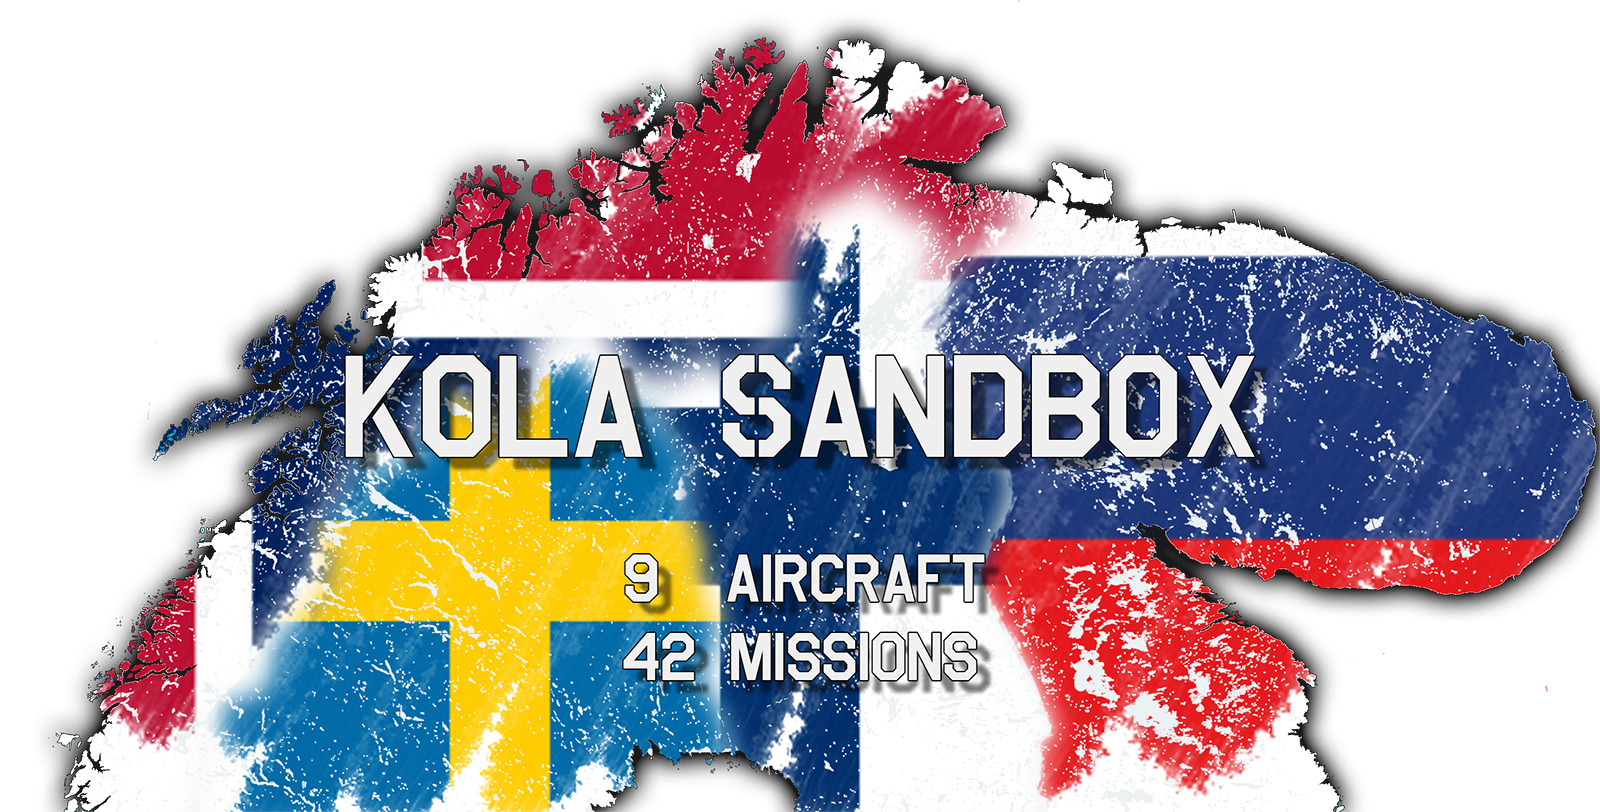 Carsten's Kola Sandbox - 42 missions in 1